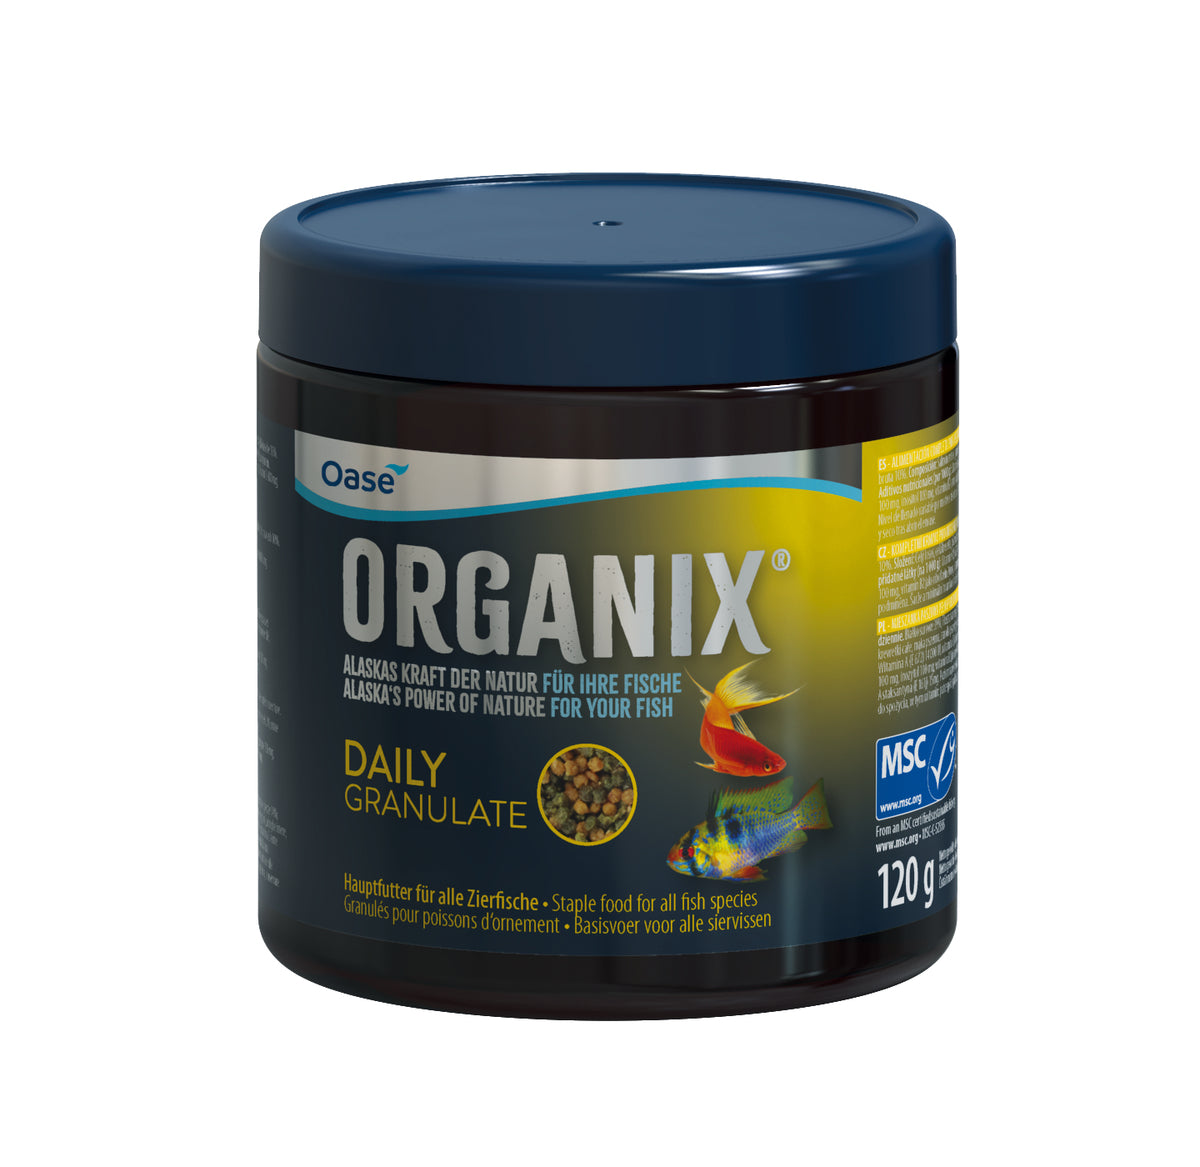 Oase - ORGANIX Daily Granulate